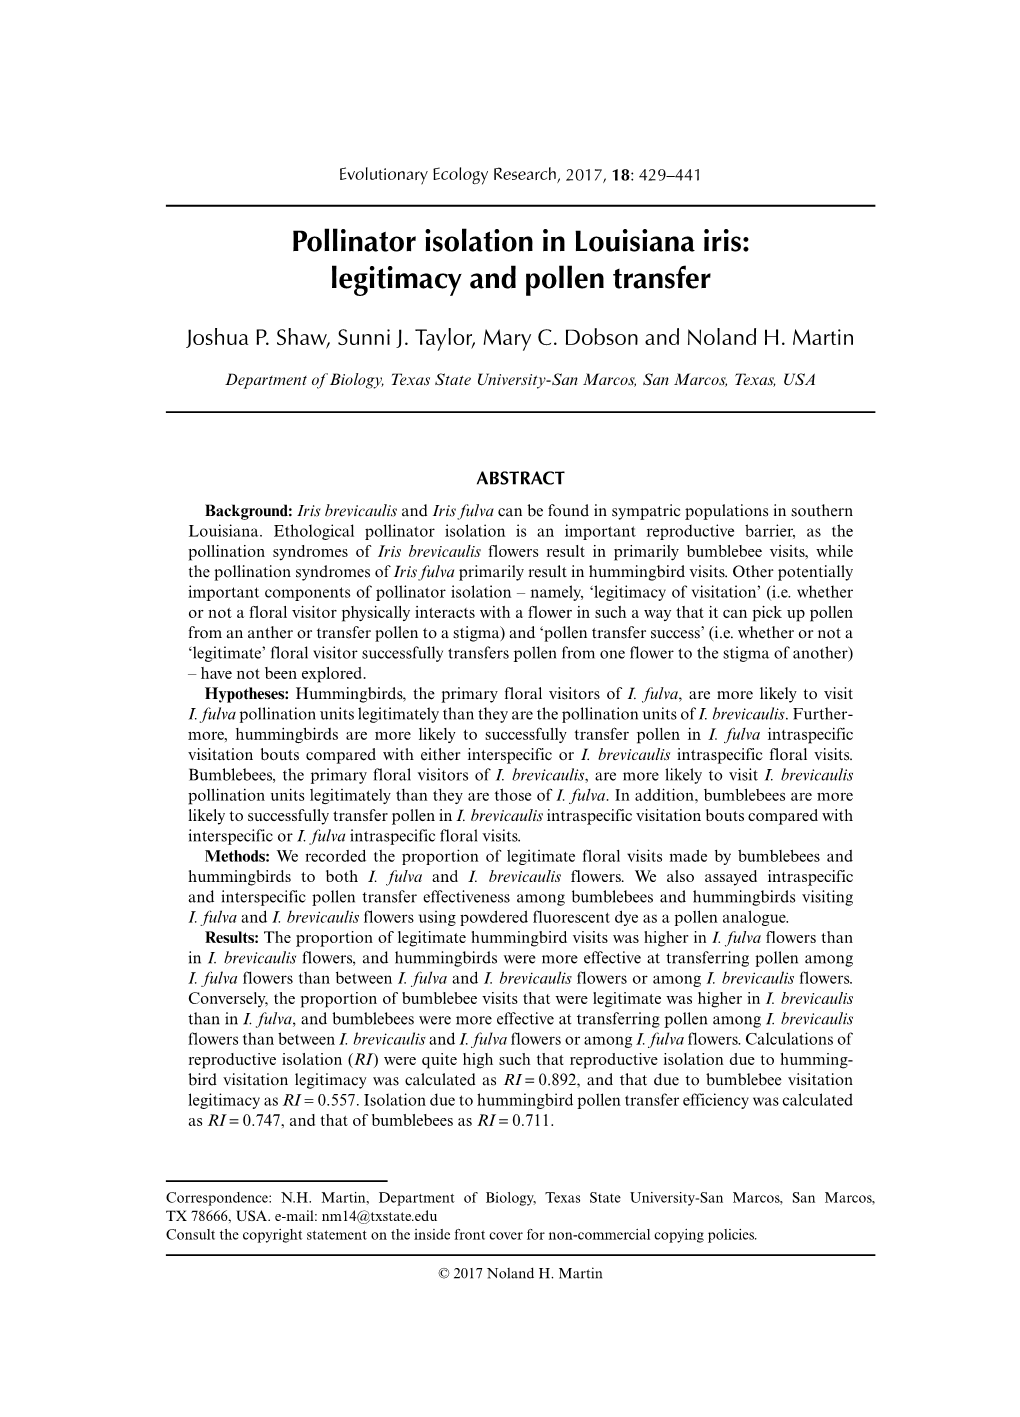 Pollinator Isolation in Louisiana Iris: Legitimacy and Pollen Transfer